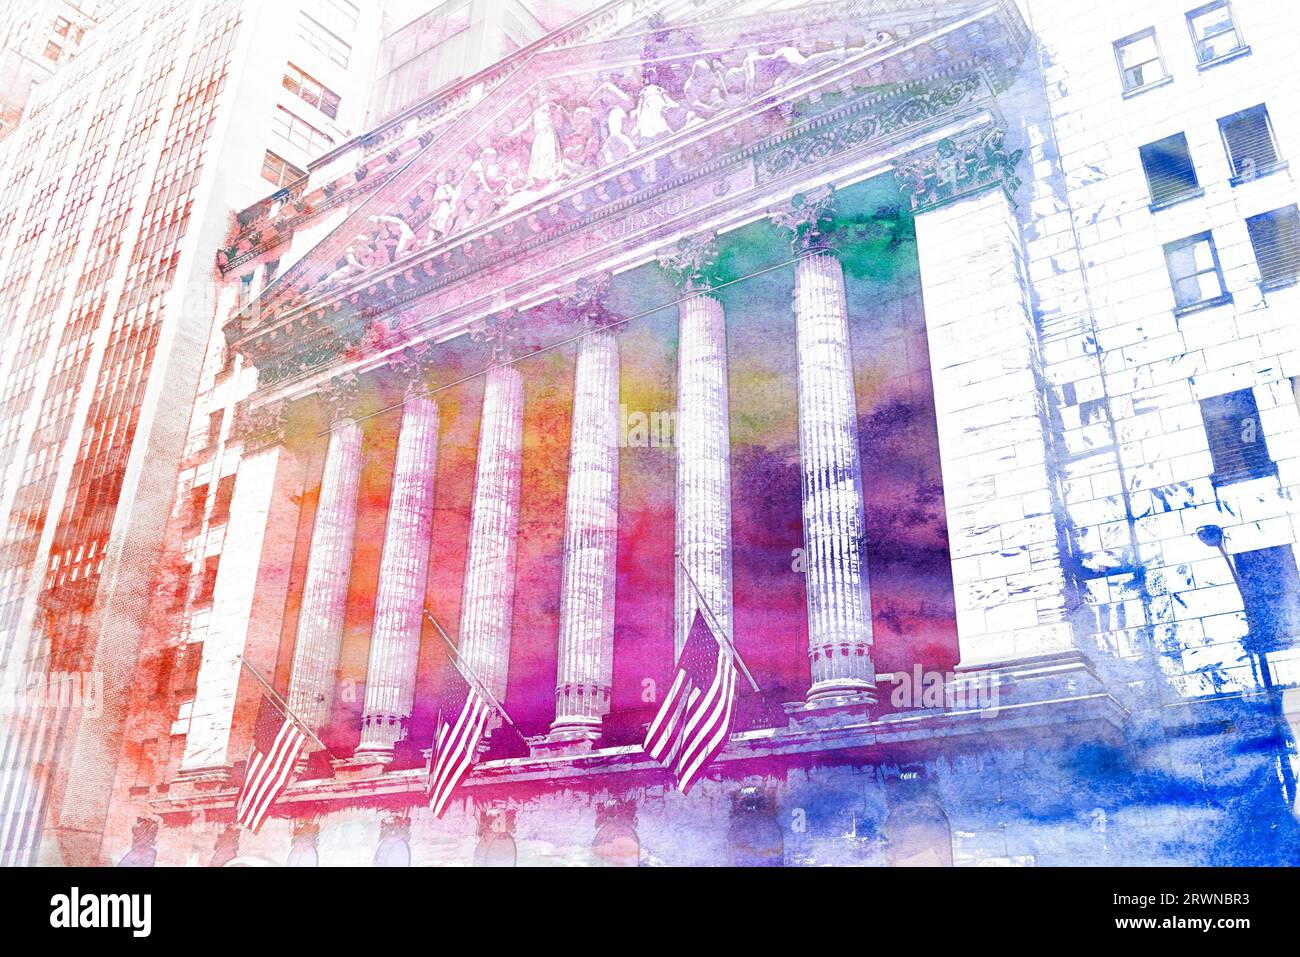 Illustration of the New York Stock Exchange Building in Lower Manhatttan. Stock Photo